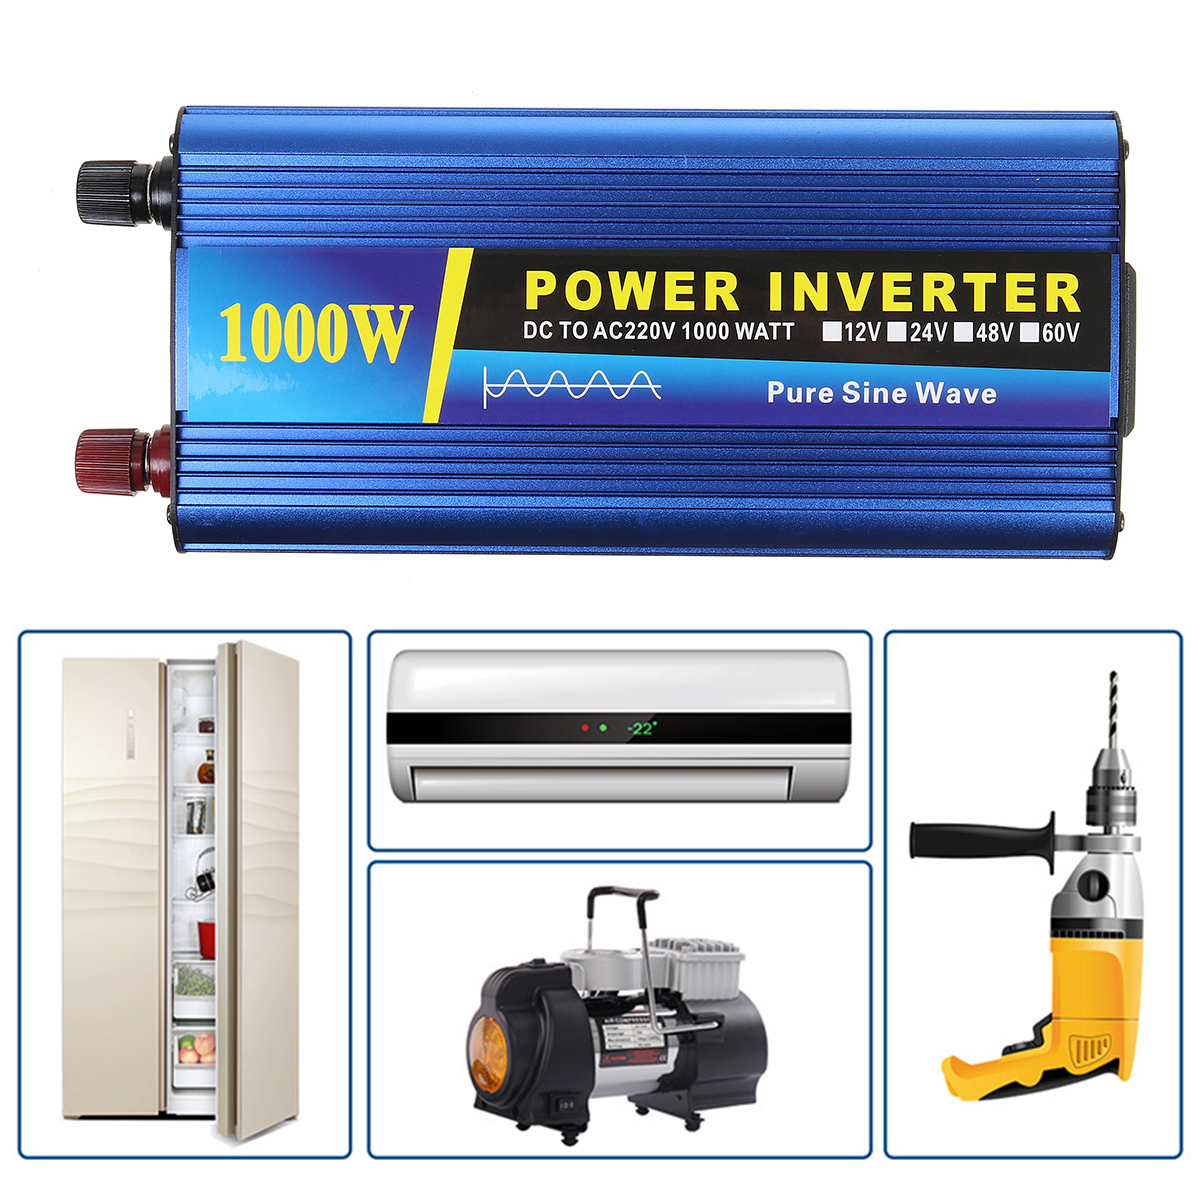 1000W-Power-Inverter-DC-122448V-to-AC-220V-Car-Sine-Wave-Converter-1770753-5